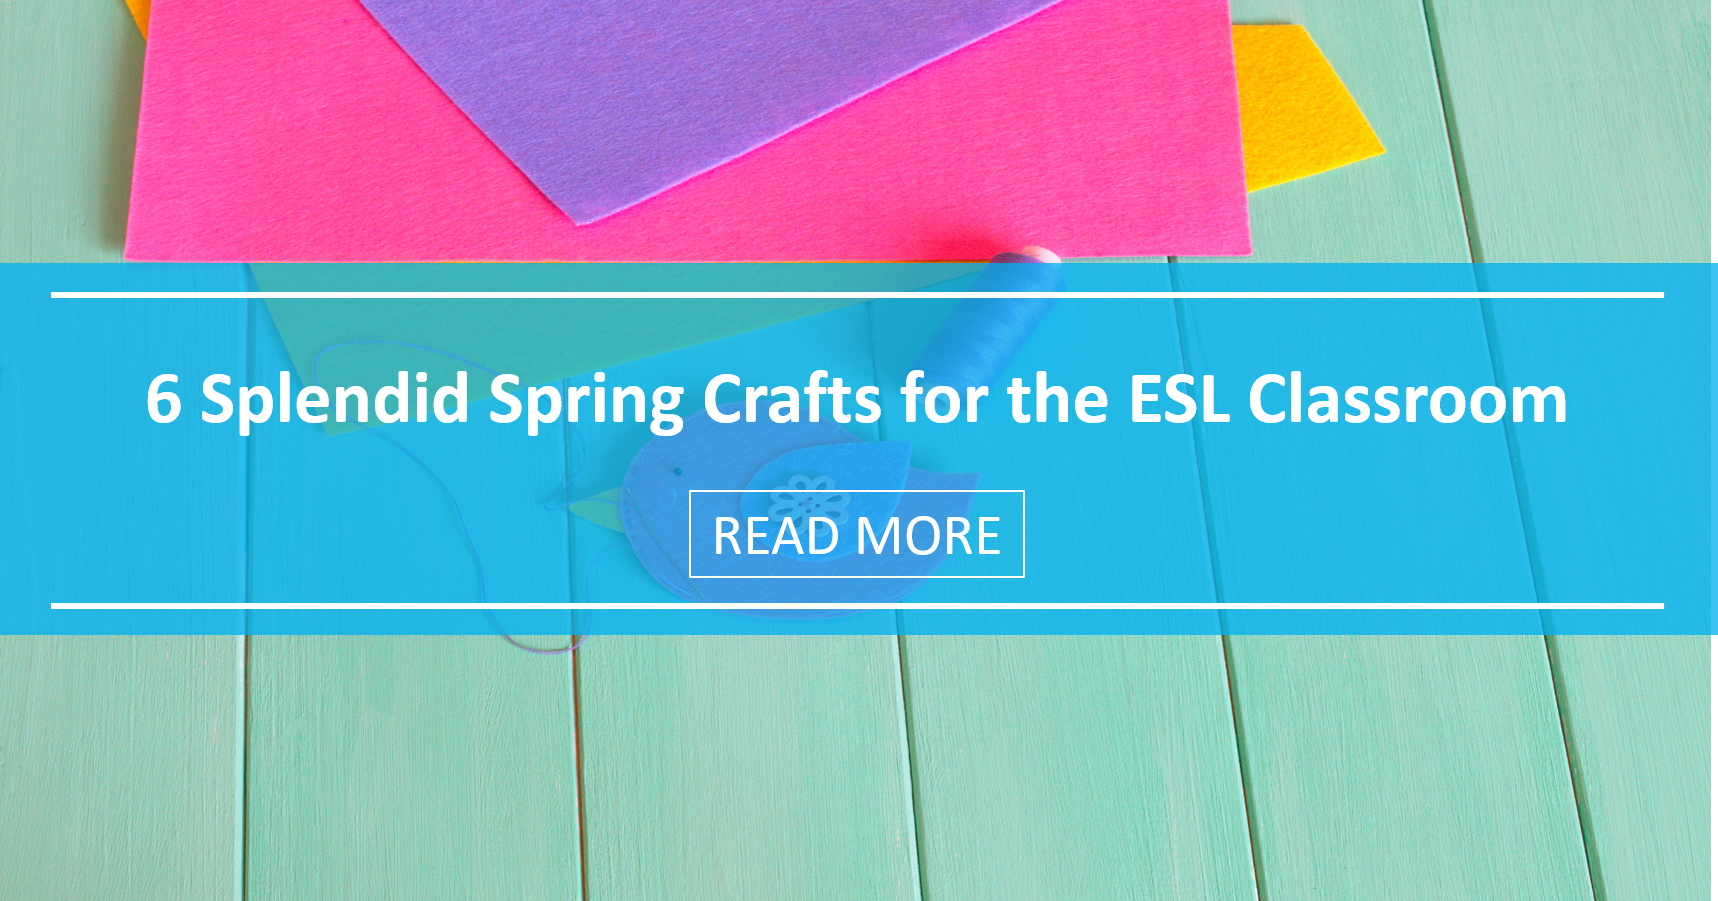 6 Splendid Spring Crafts for the ESL Classroom